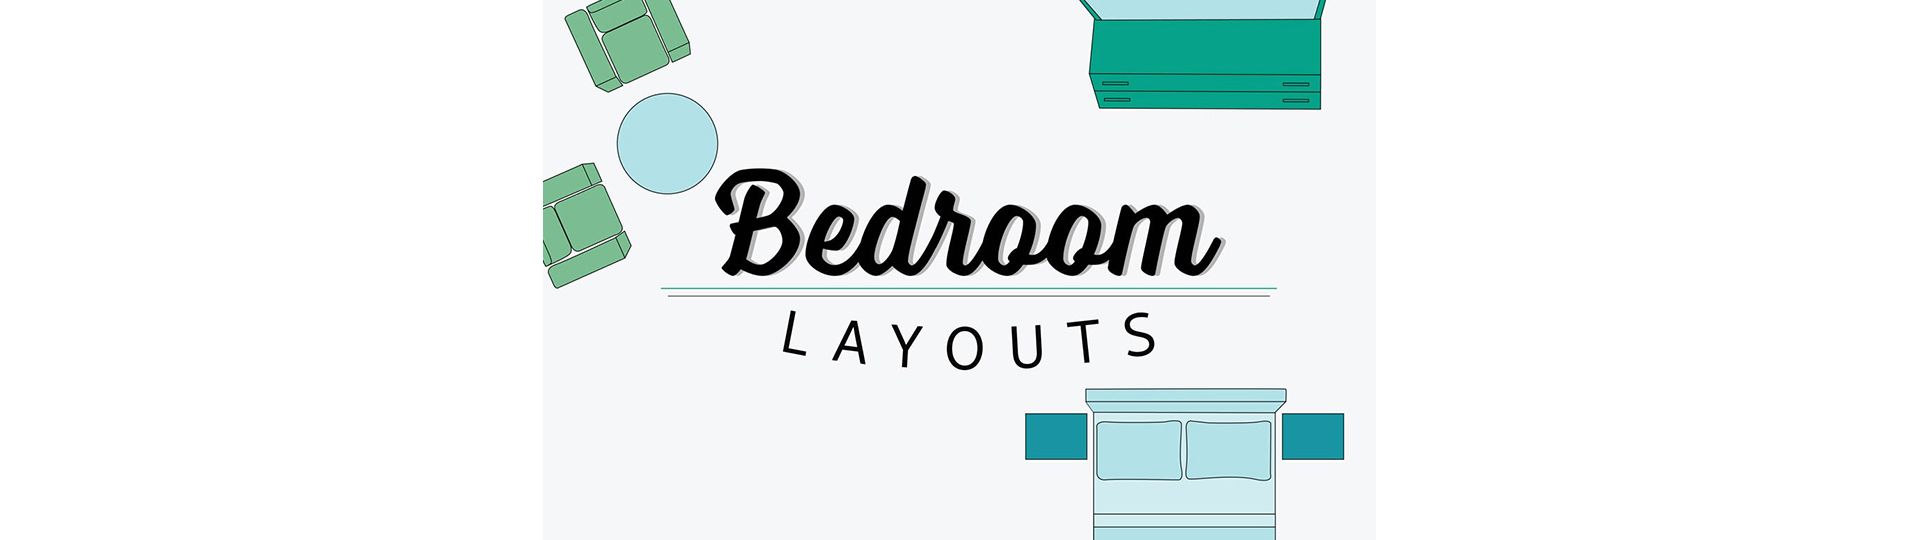 Bedroom Layout Mock-Up